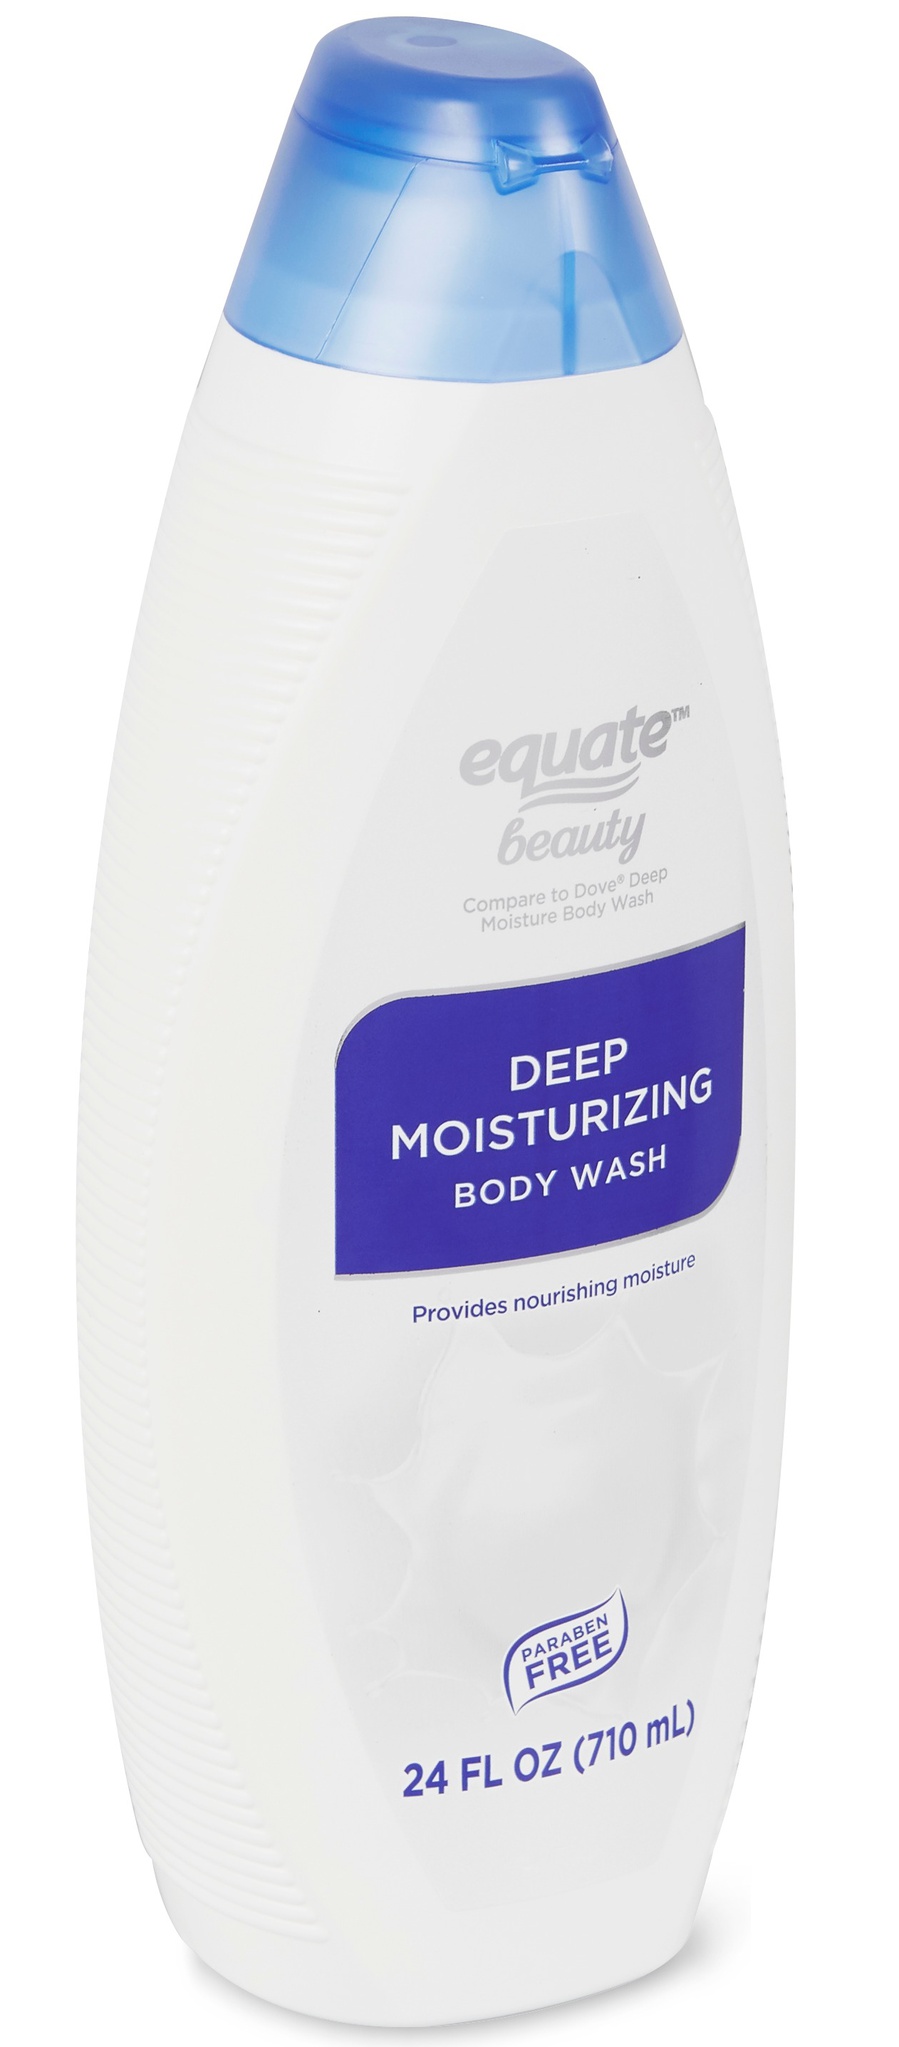 Equate Beauty Deep Moisturizing Body Wash